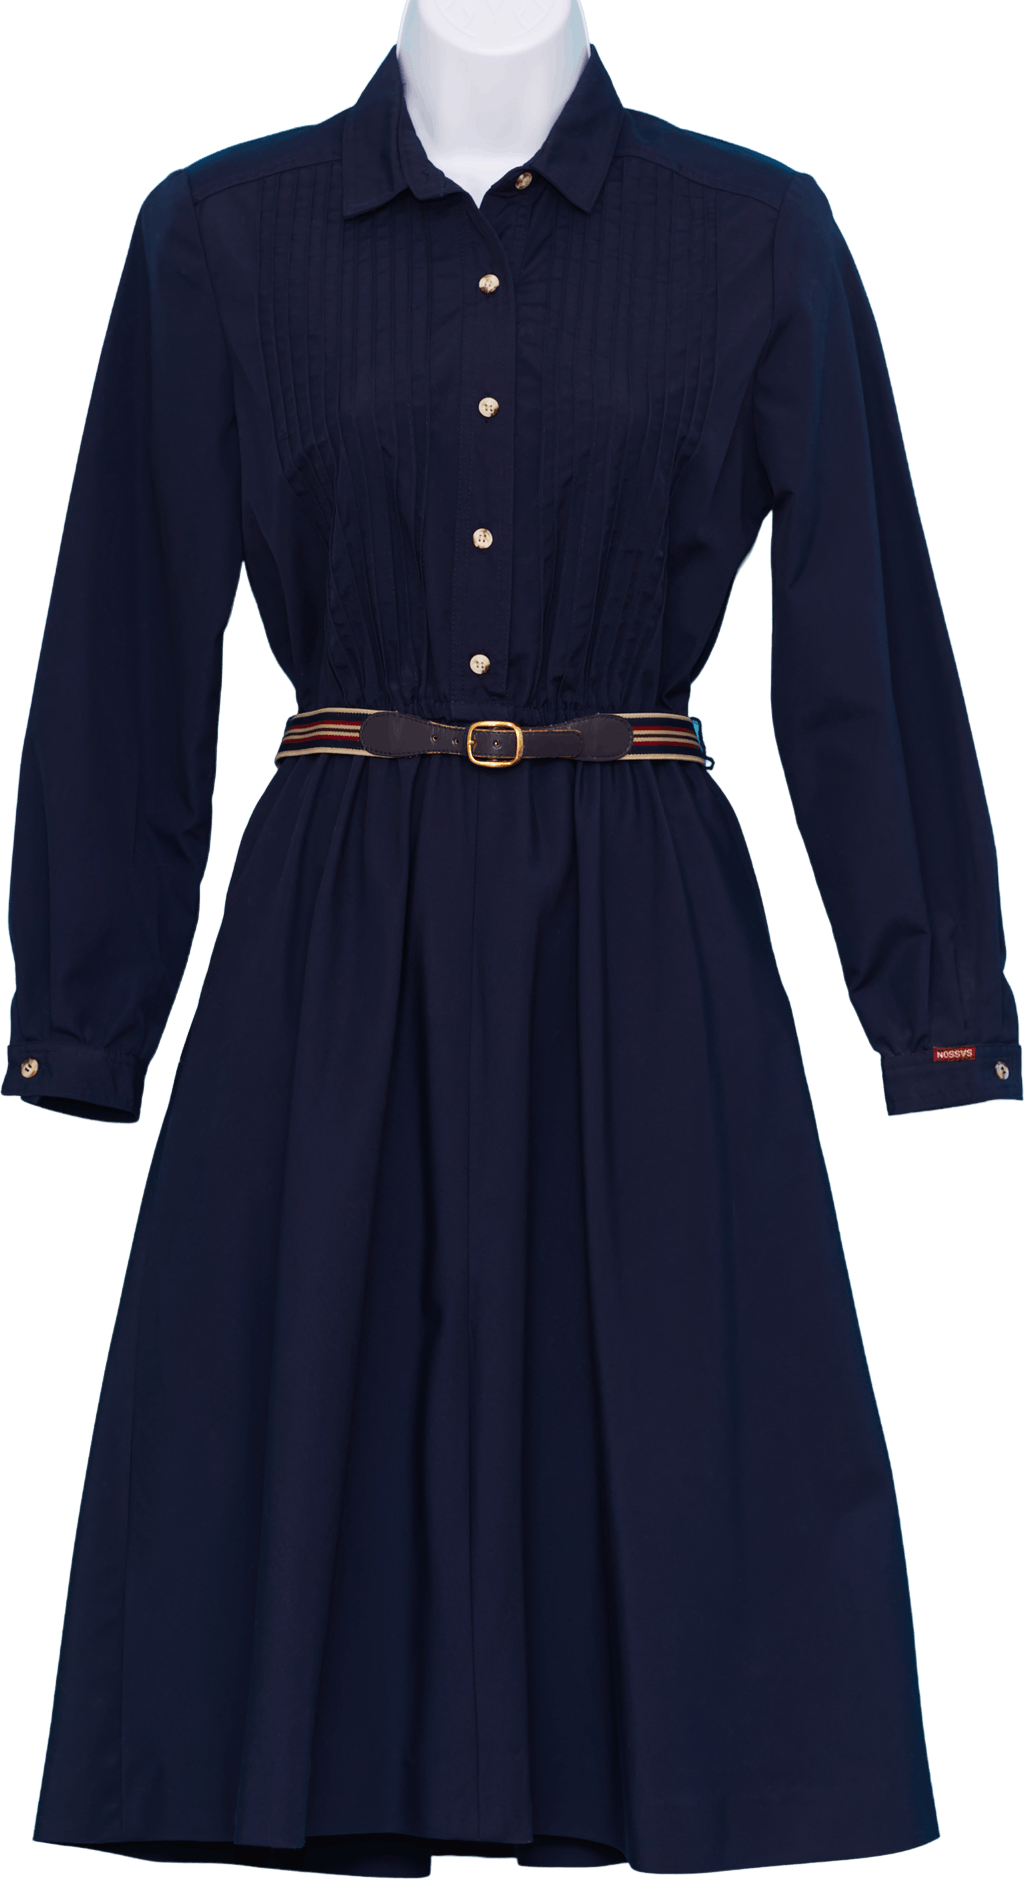 Vintage 80’s Navy Blue Dress | Preppy Shirtwaist by Sasson | Shop THRILLING